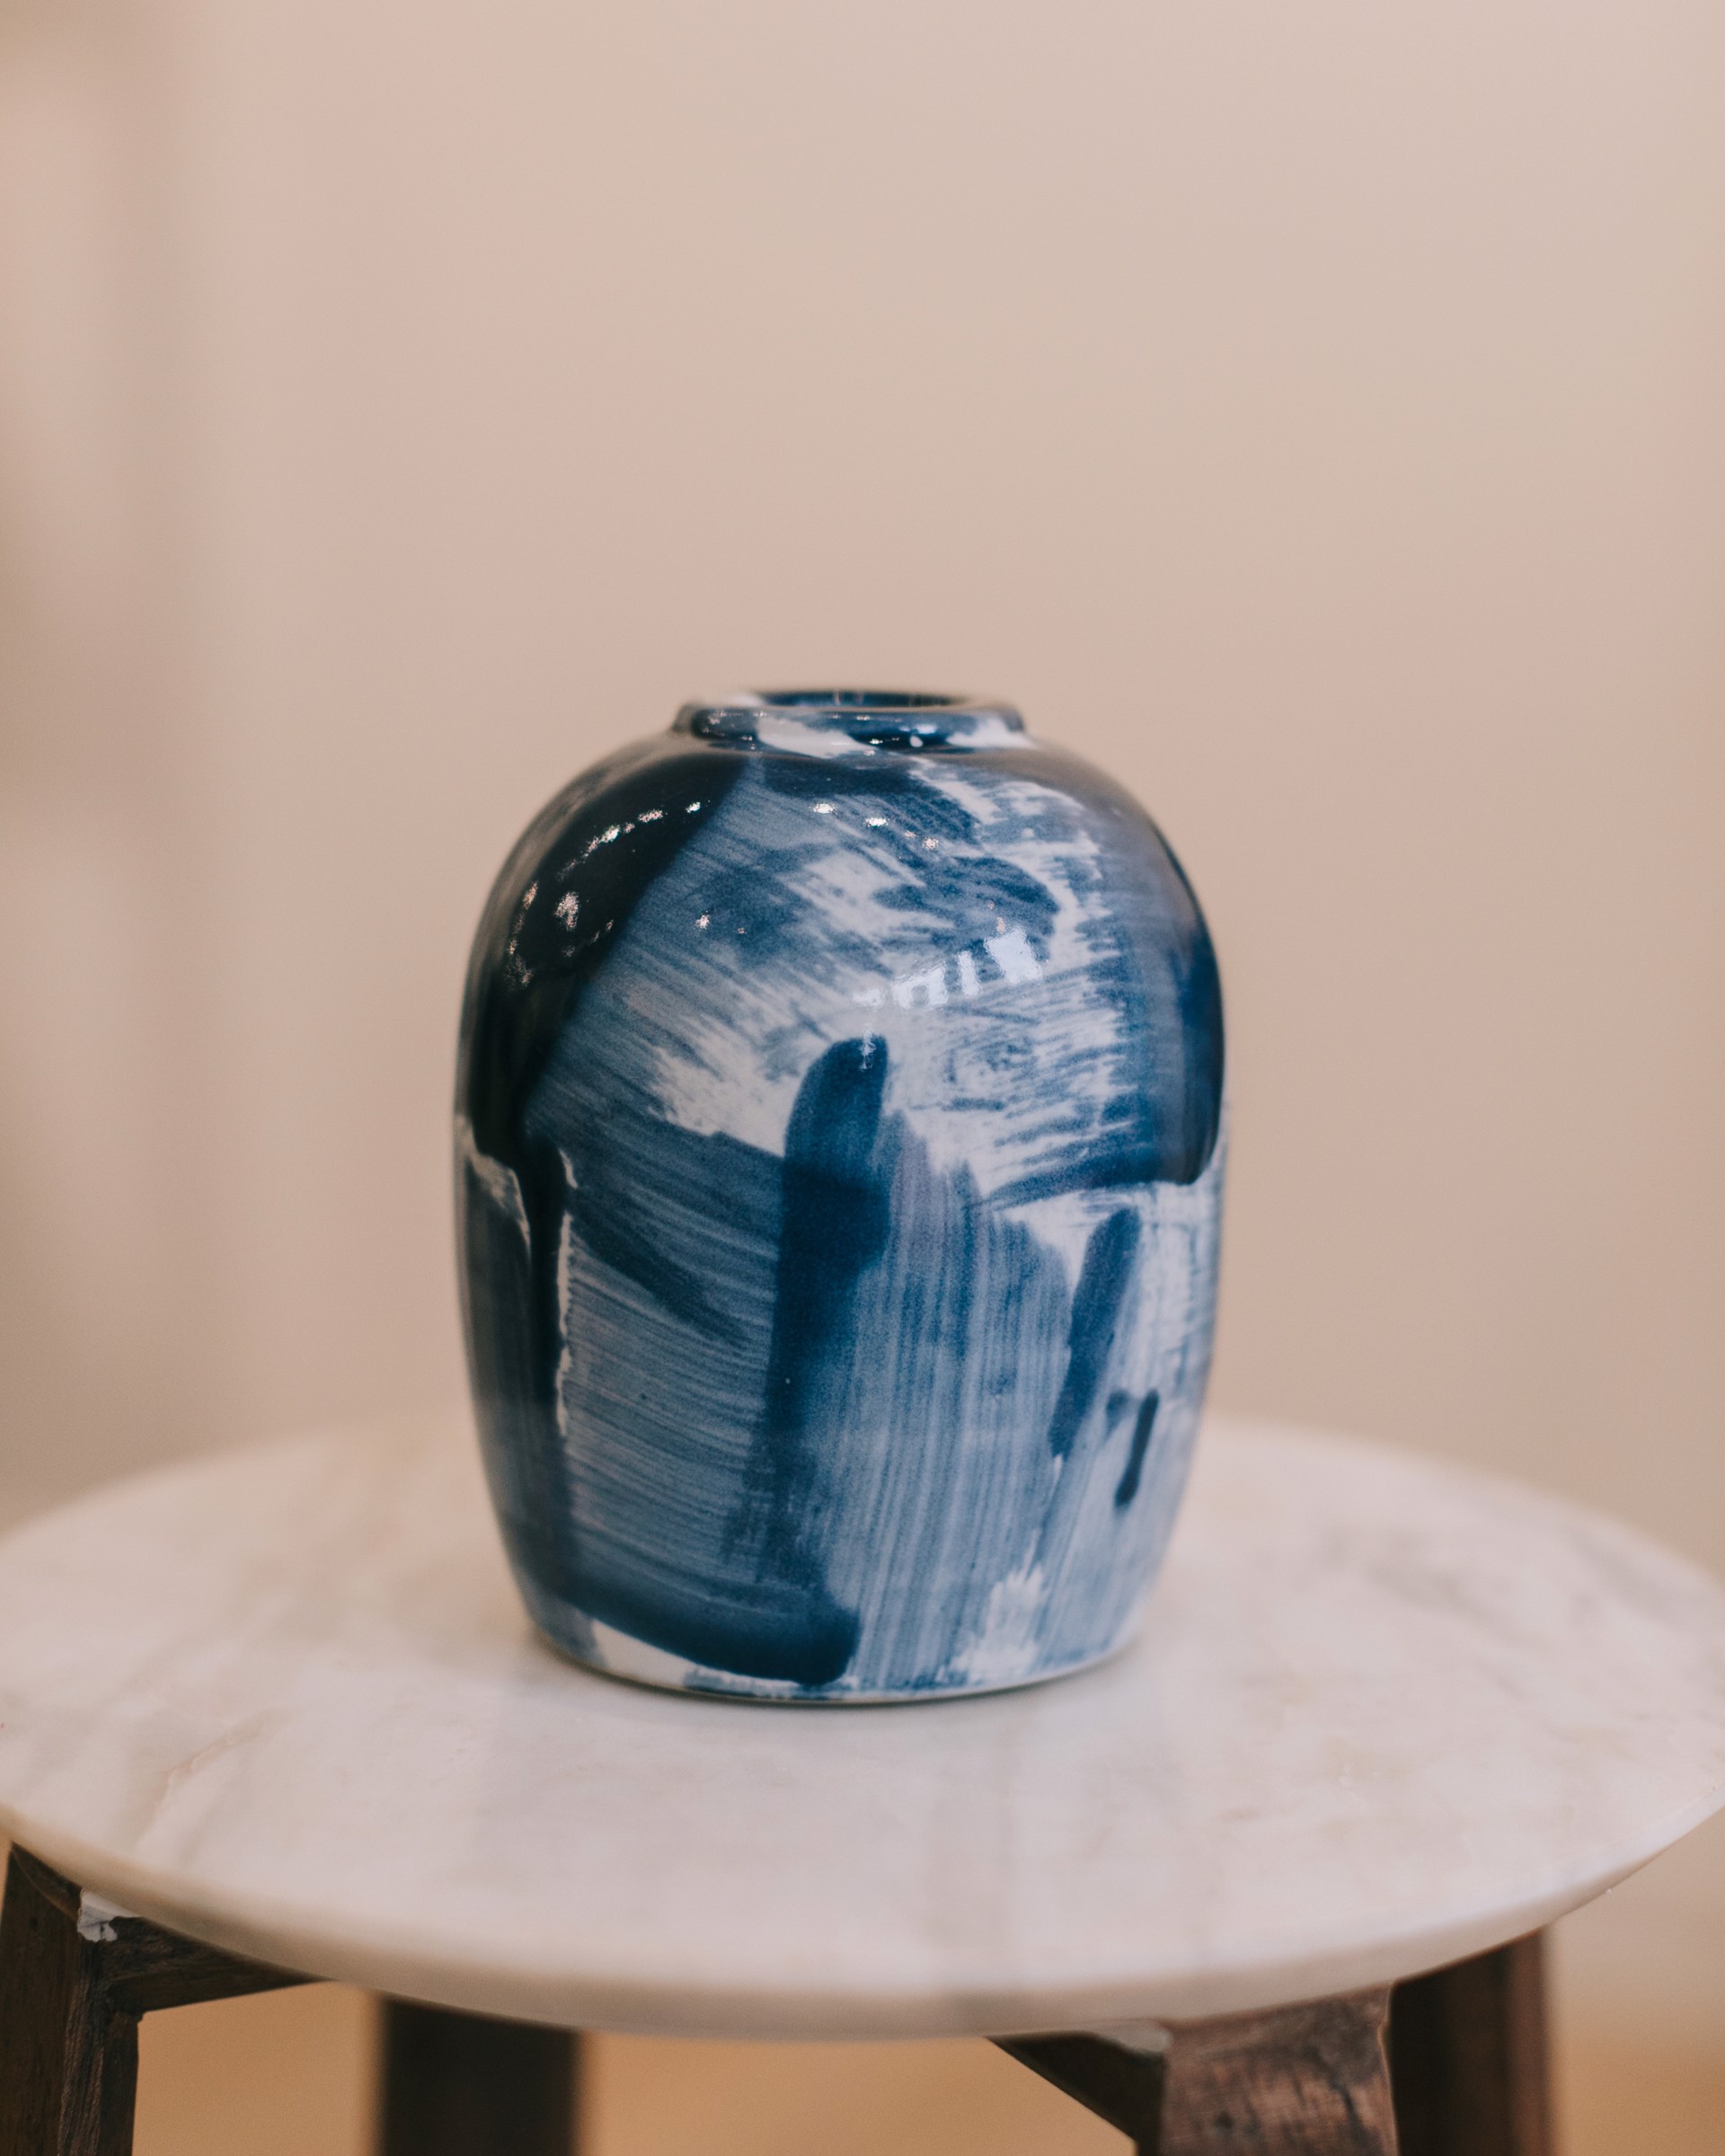 Small Brush Stroke Vase #3 by William Mantor